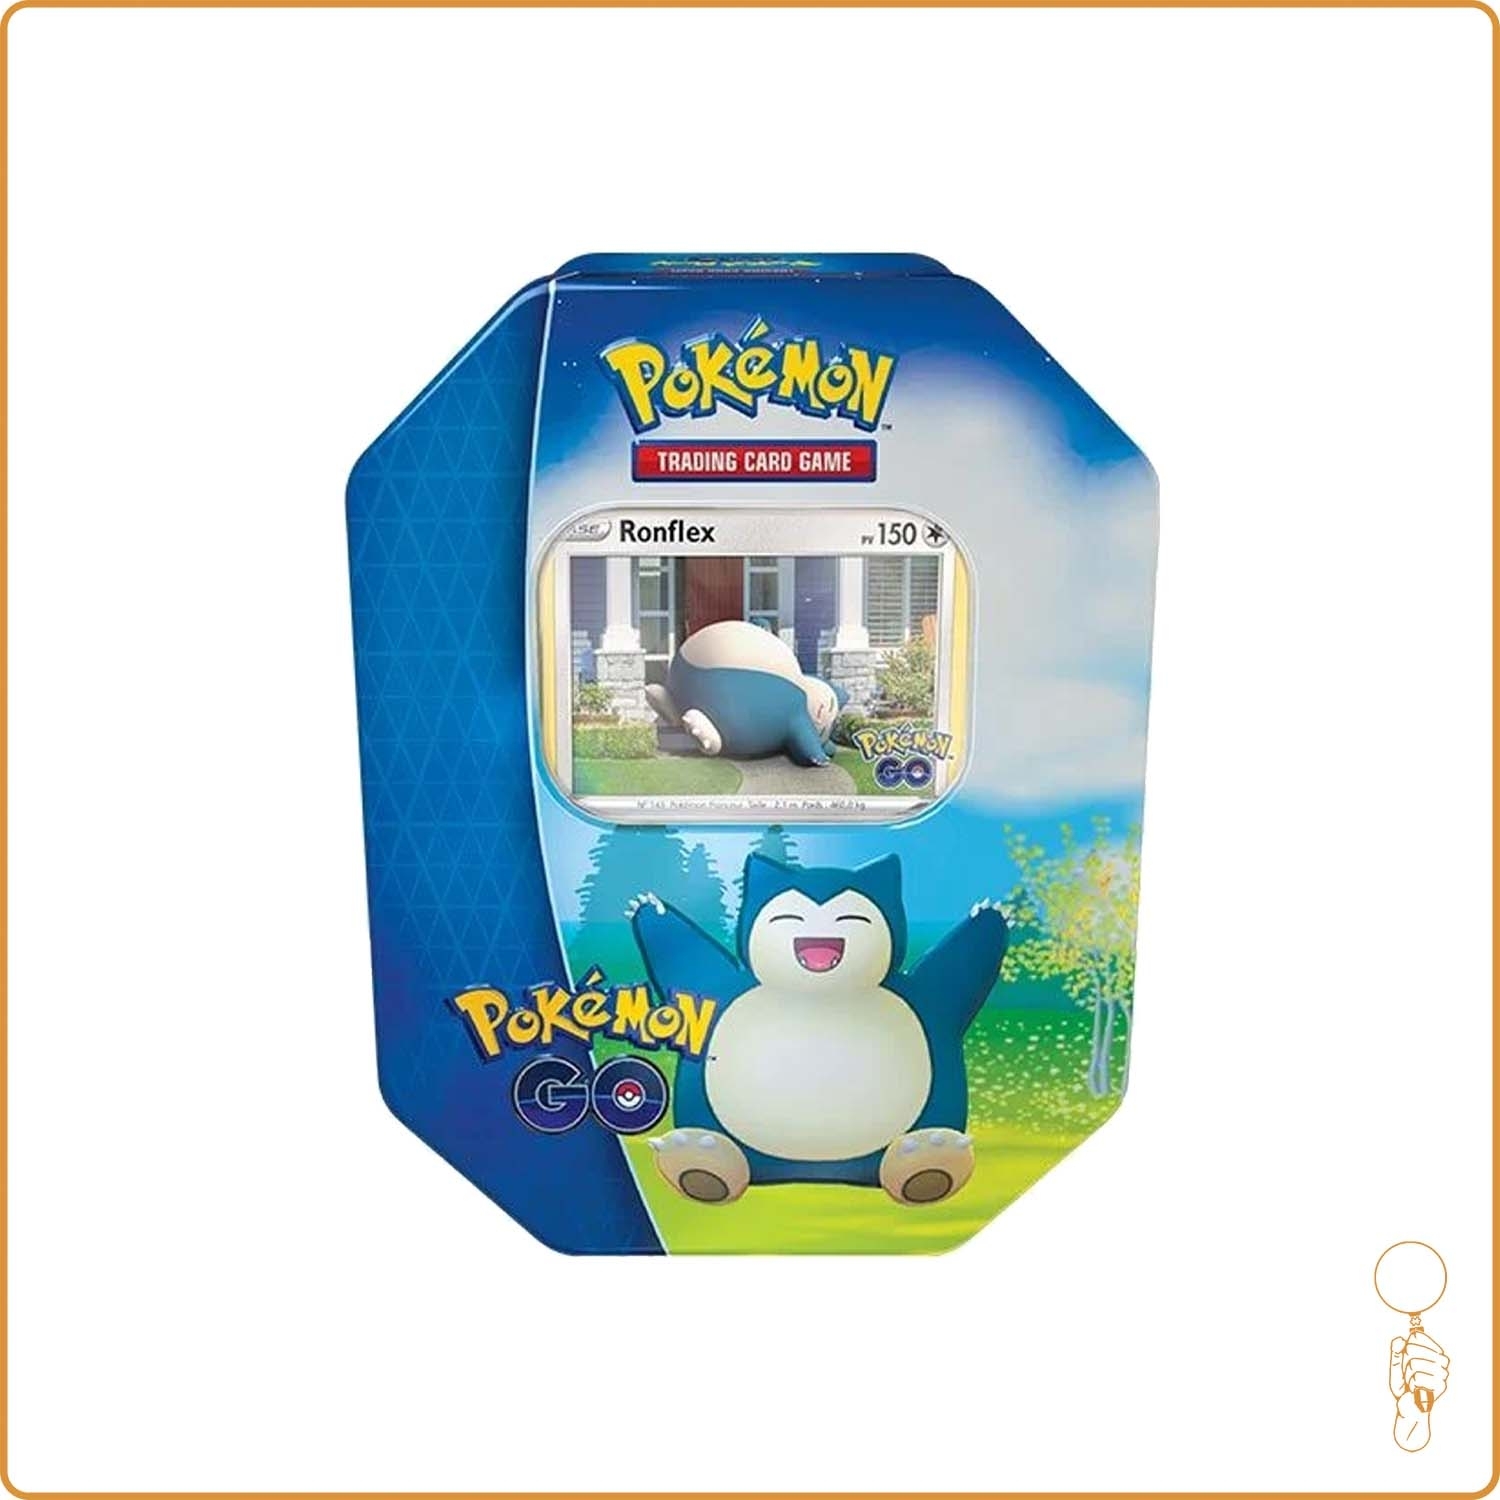 Pokébox - Pokemon GO - Ronflex - Scellé - Français The Pokémon Company - 1